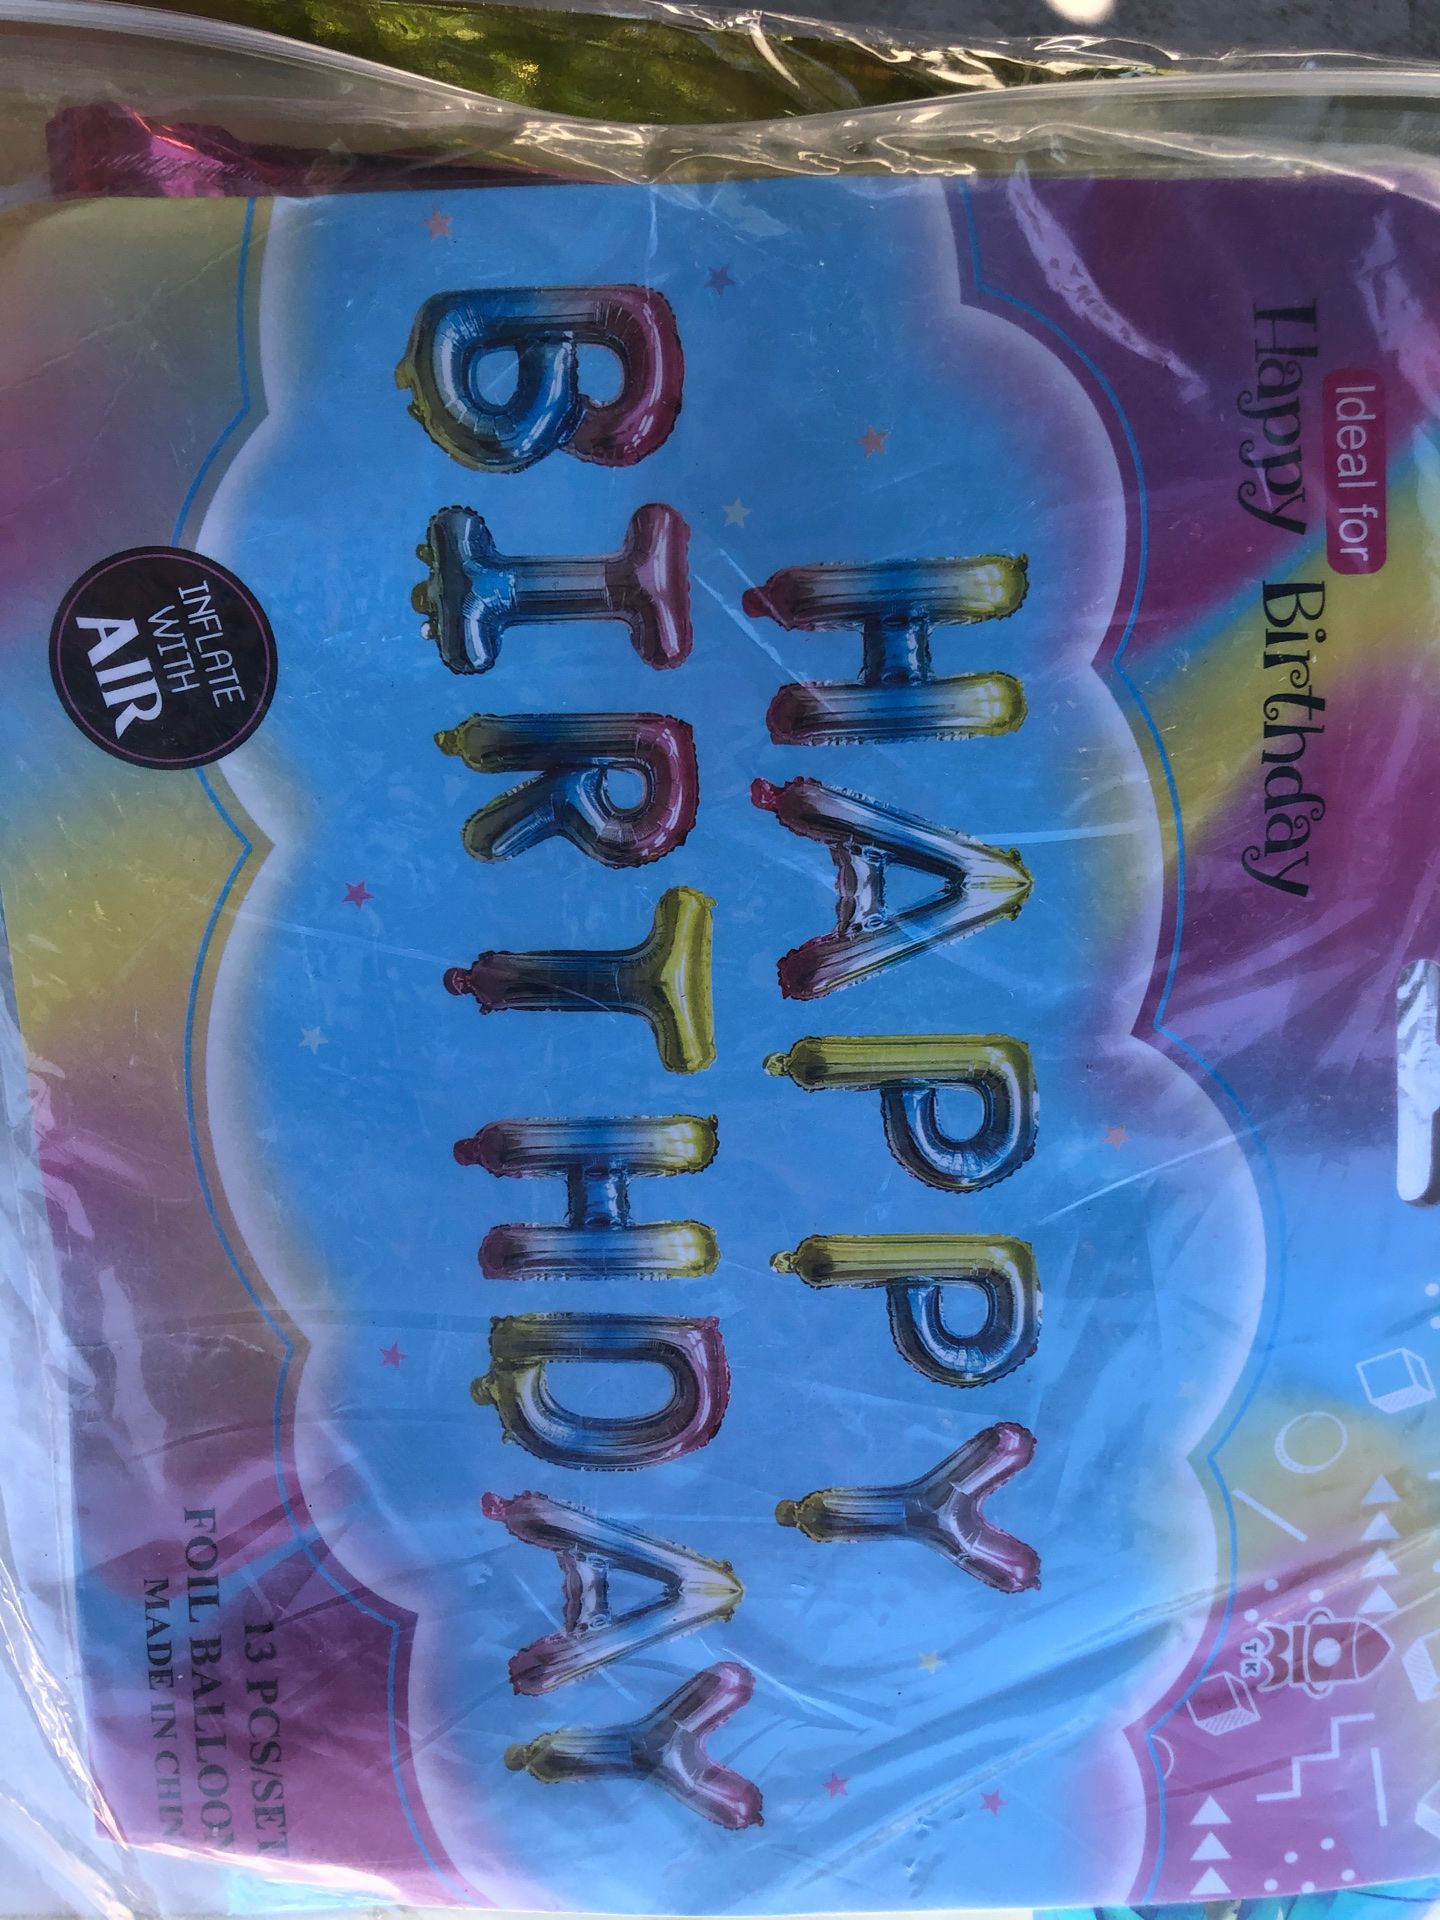 Pastel Rainbow “Happy Birthday” balloons